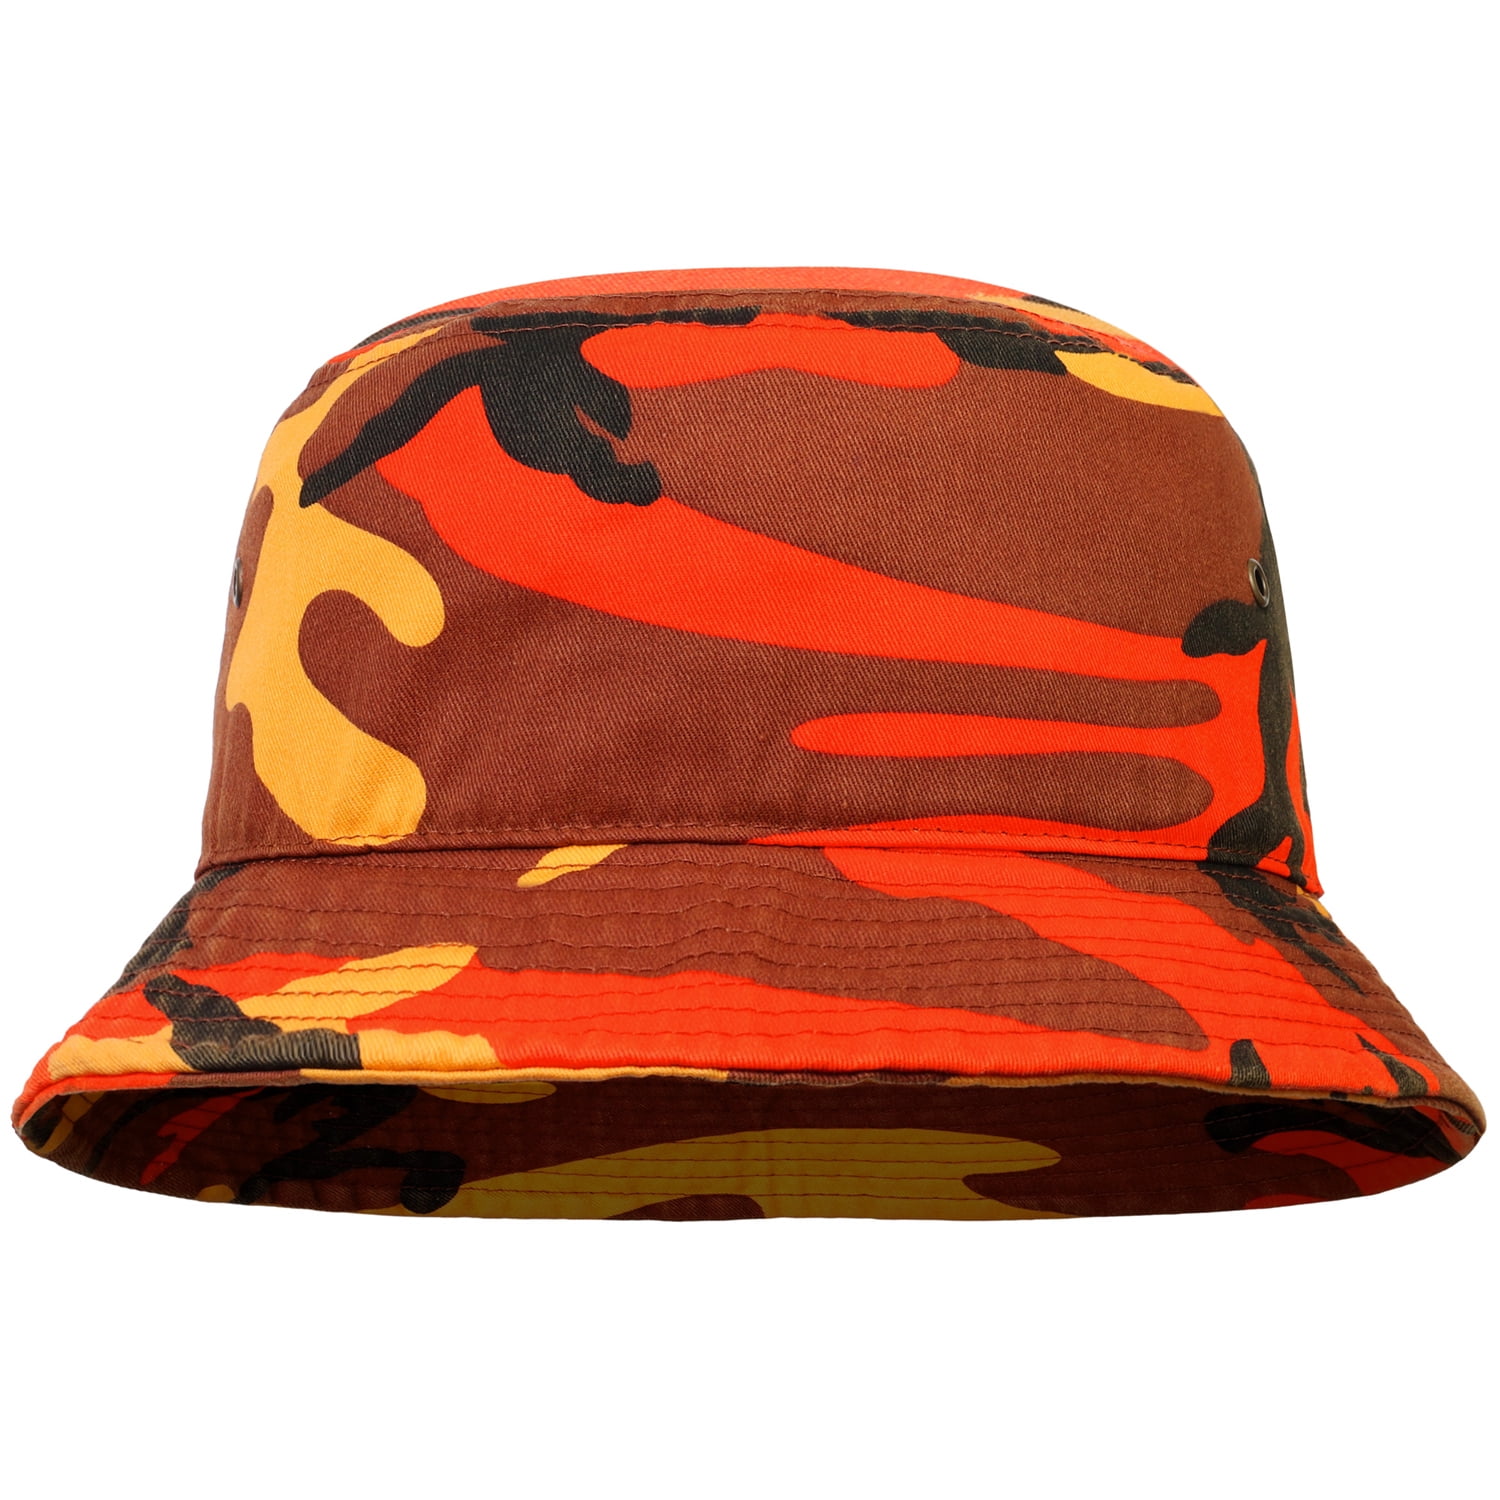 Bucket Hat for Men Women Unisex 100% Cotton Packable Foldable Summer Travel  Beach Outdoor Fishing Hat - LXL Orange Camouflage